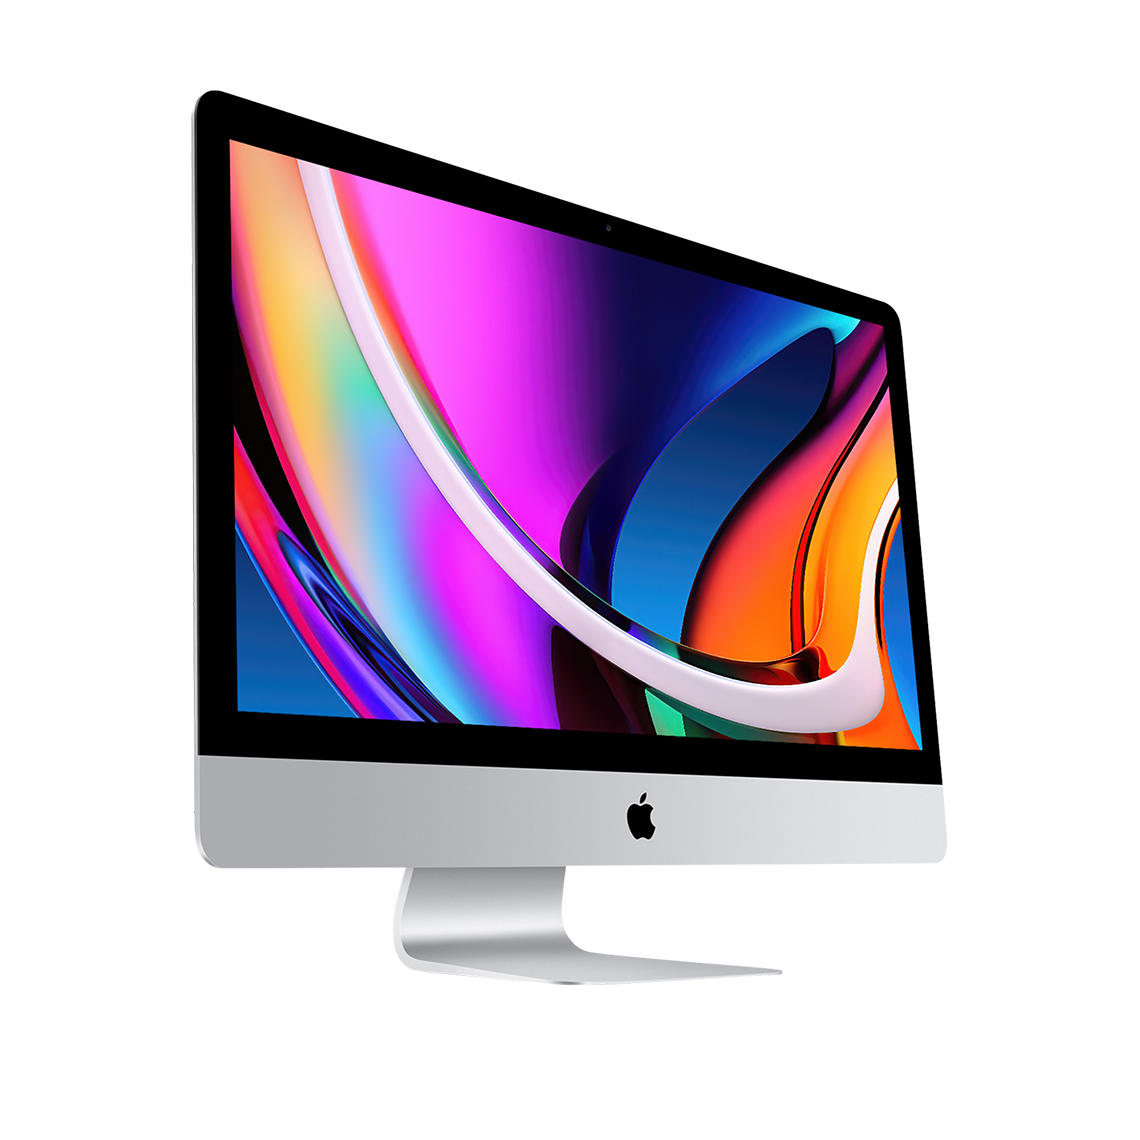 2020 iMac 27-inch 5K - Intel Core i9, 32GB, 2TB Flash, Radeon Pro 5300 4GB, Grade A